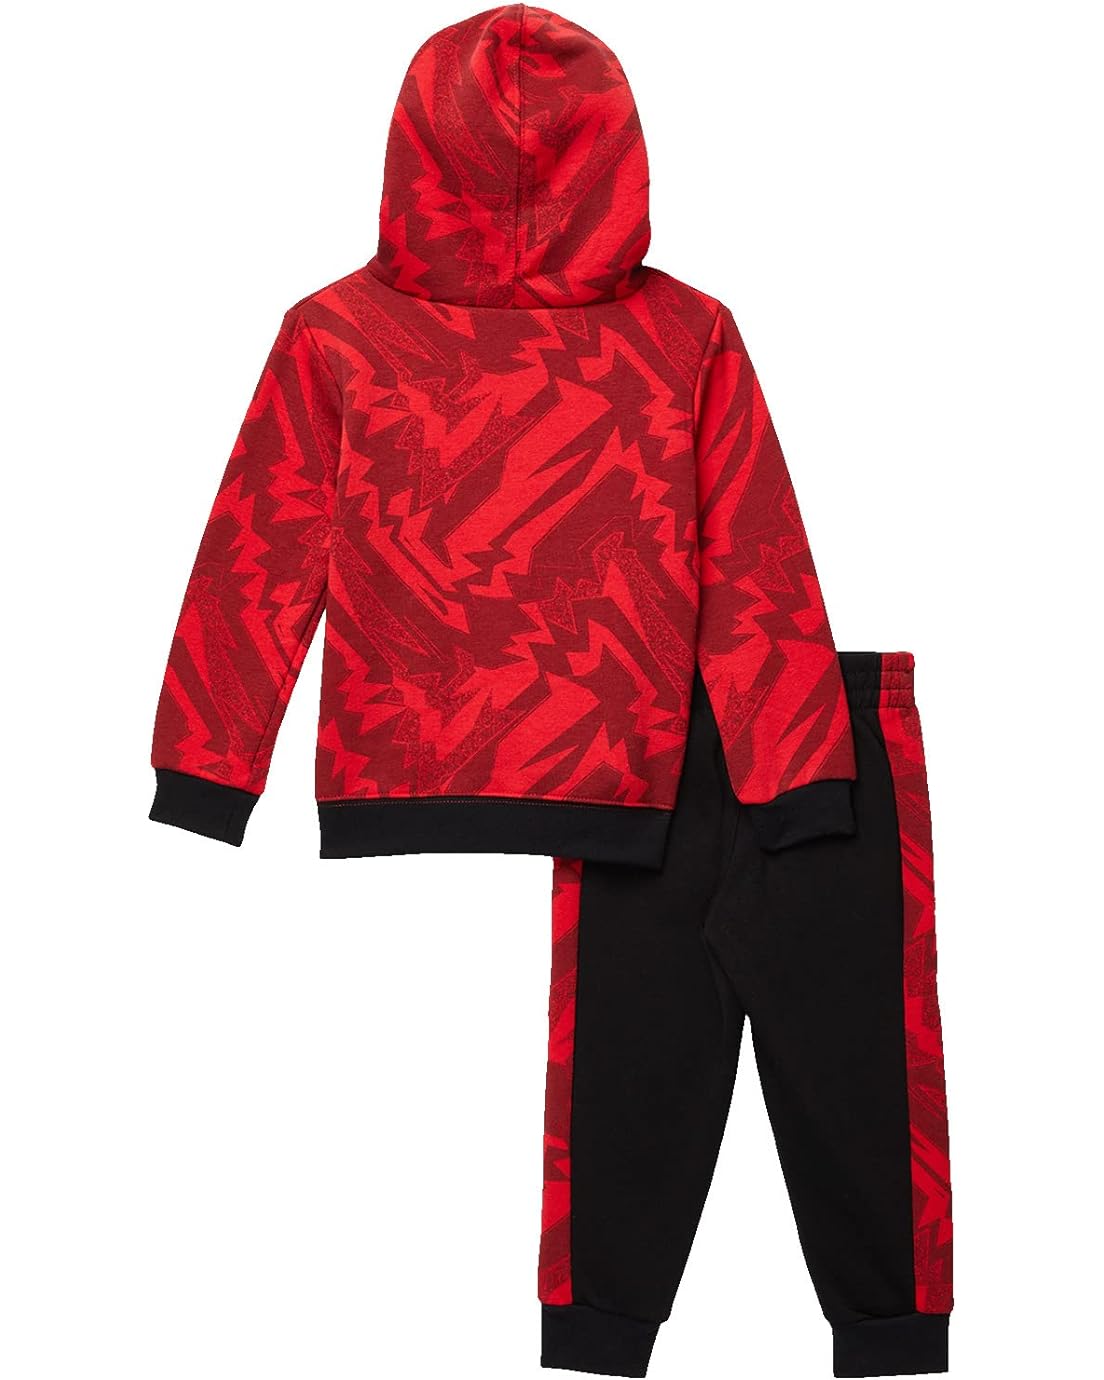  Jordan Kids MJ Essentials Fleece All Over Print Set (Toddler)